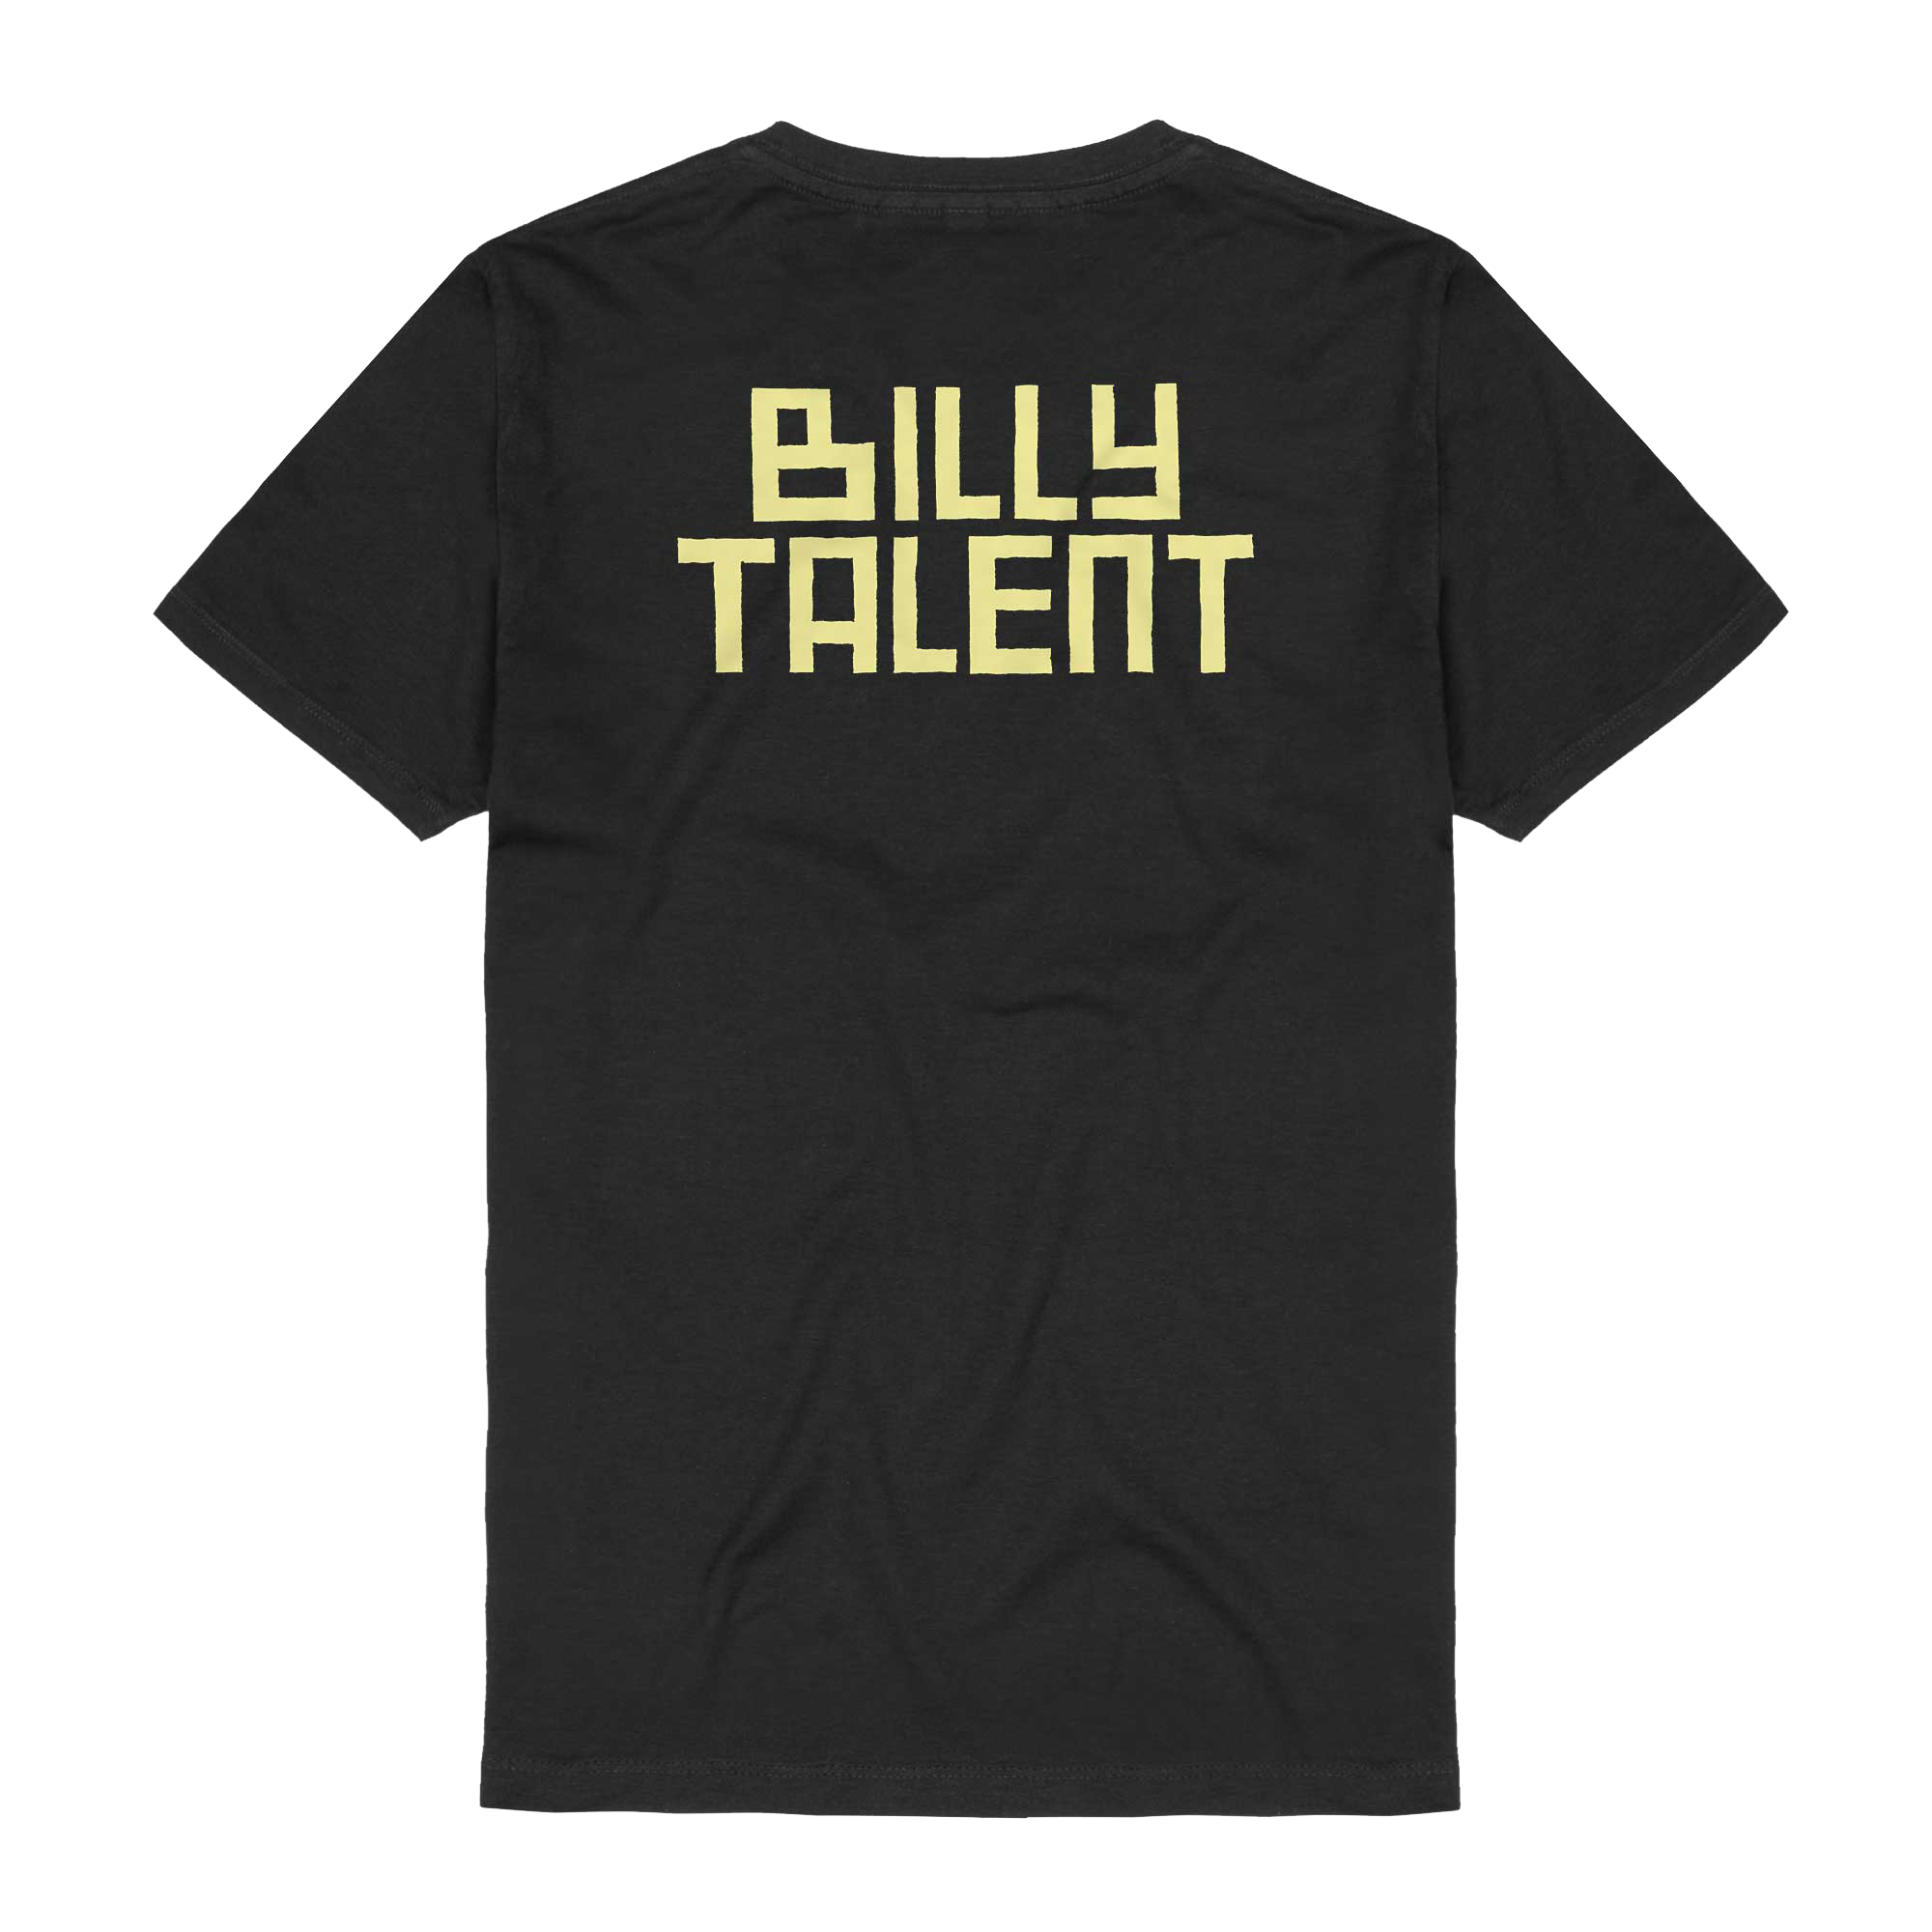 https://images.bravado.de/prod/product-assets/product-asset-data/billy-talent/billy-talent/products/132491/web/436186/image-thumb__436186__3000x3000_original/Billy-Talent-Afraid-Of-Heights-T-Shirt-schwarz-132491-436186.23c39885.png